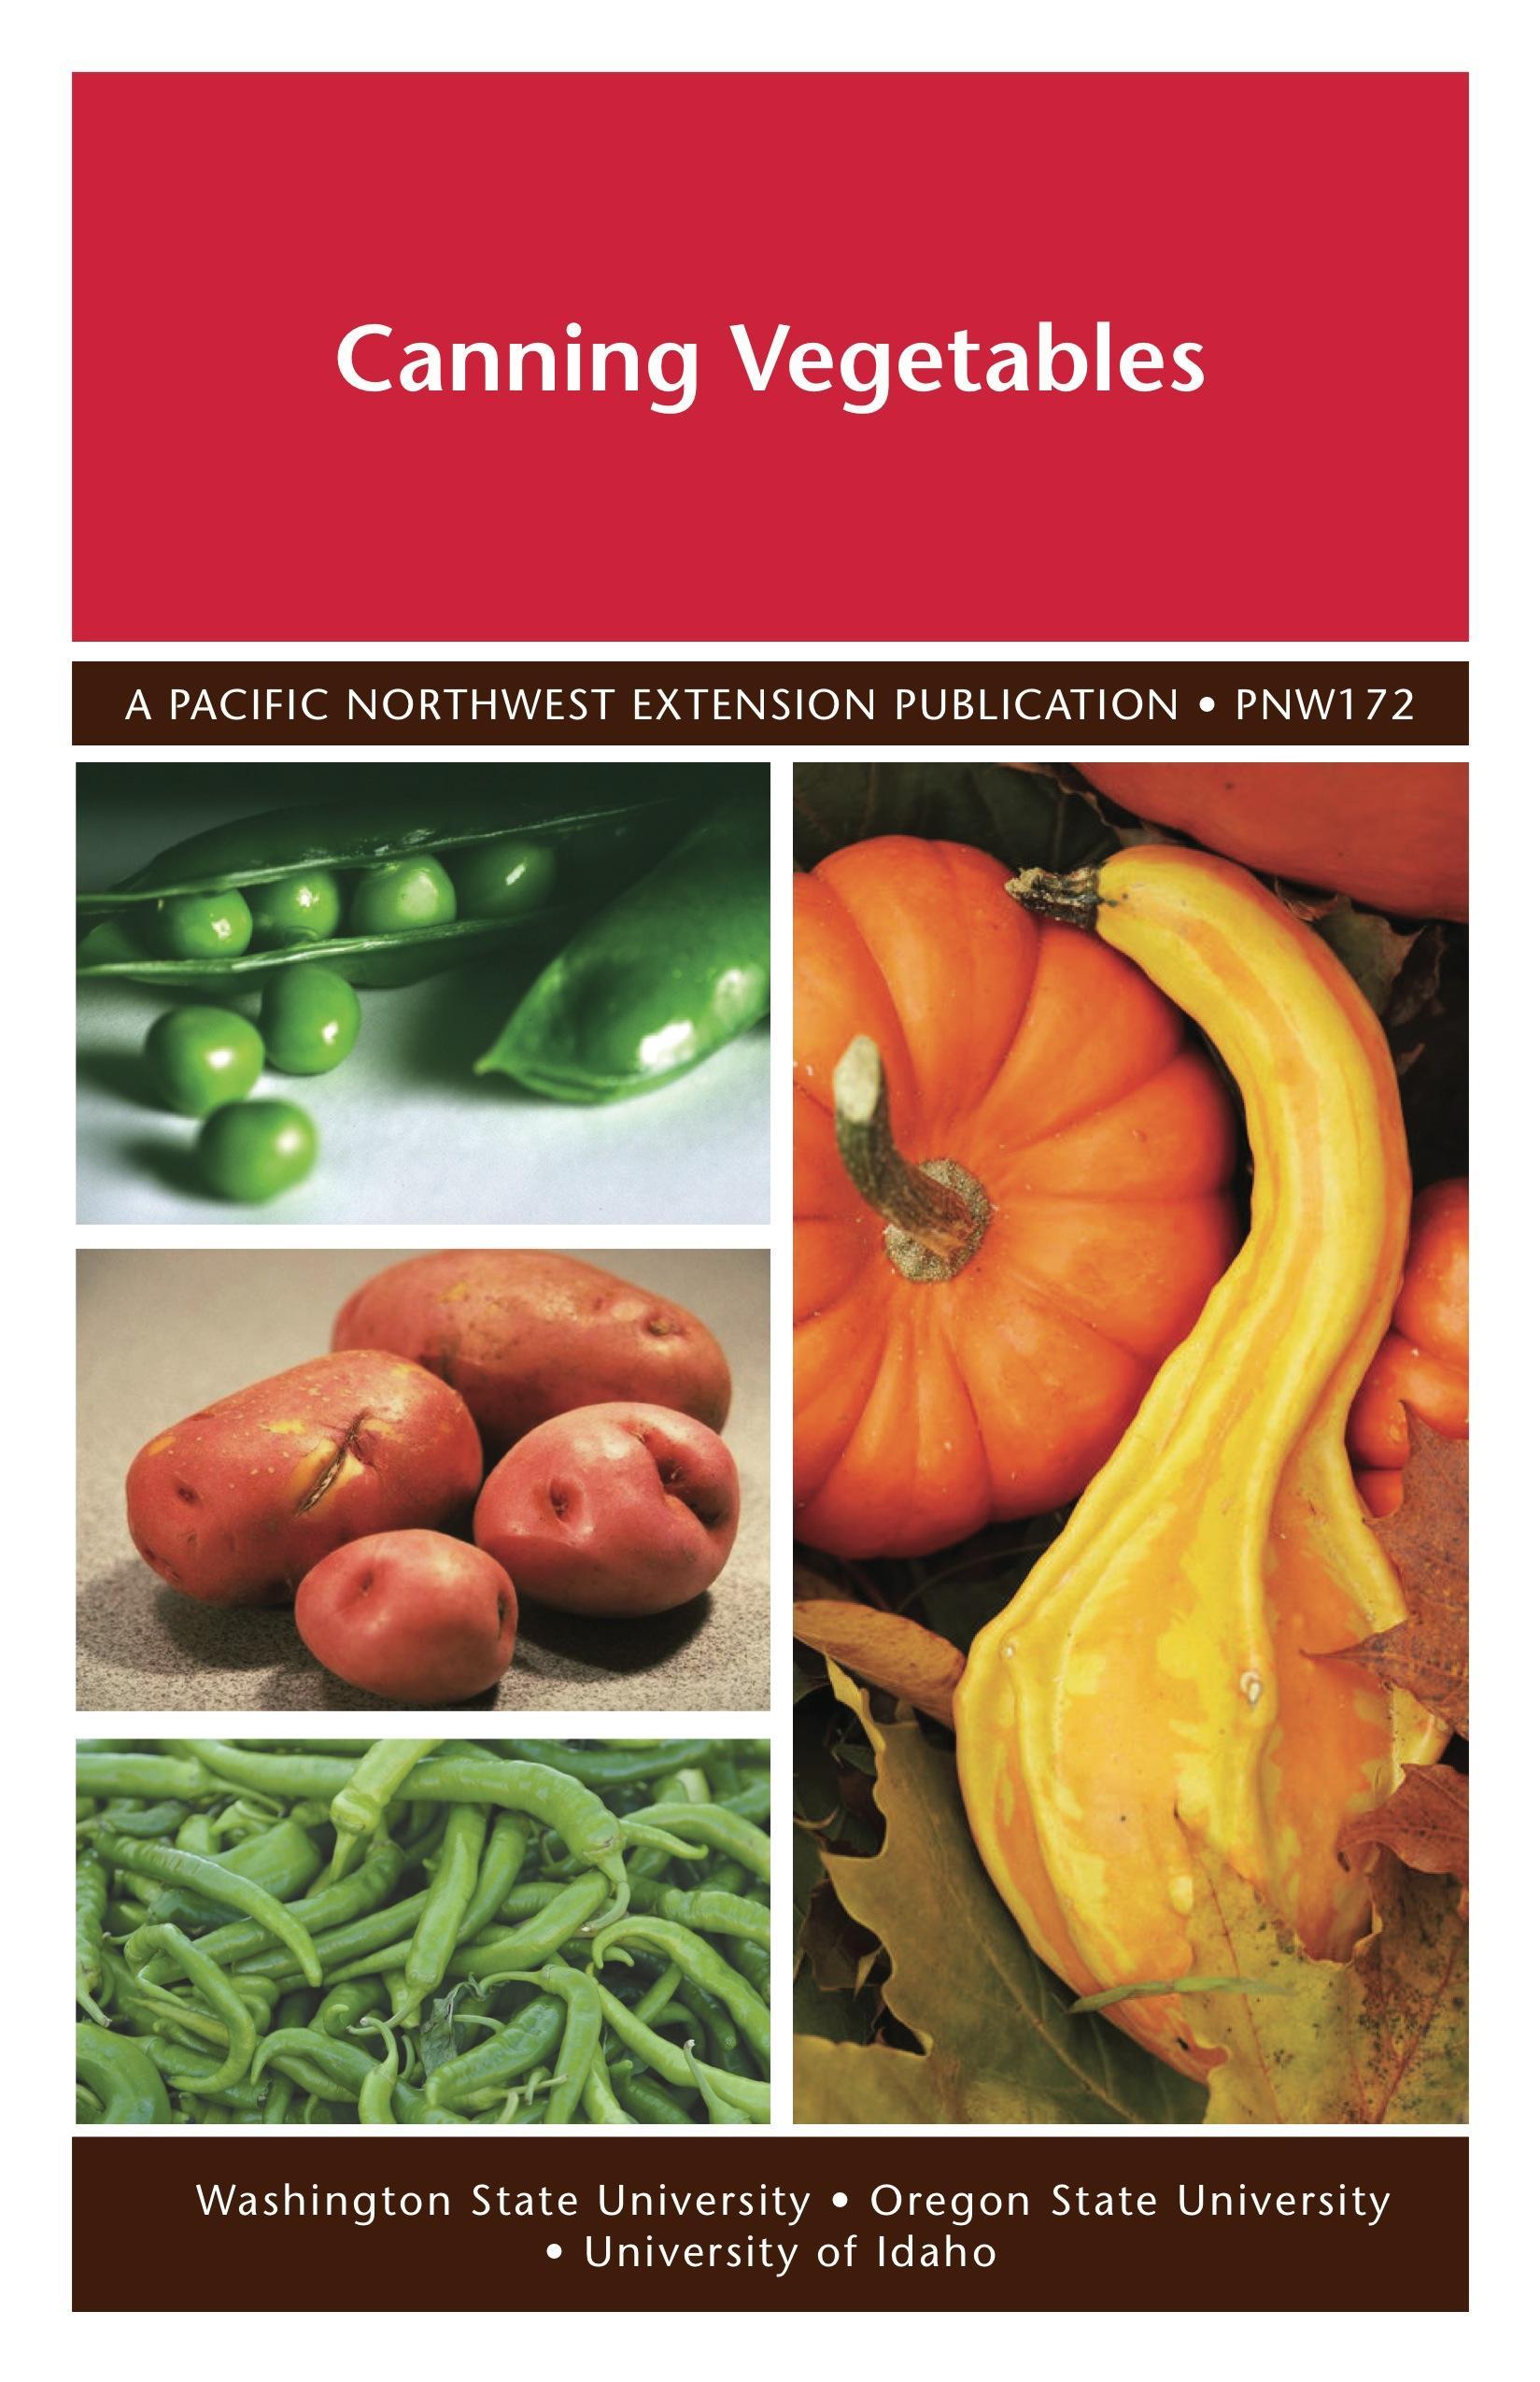 Image of Canning Vegetables publication